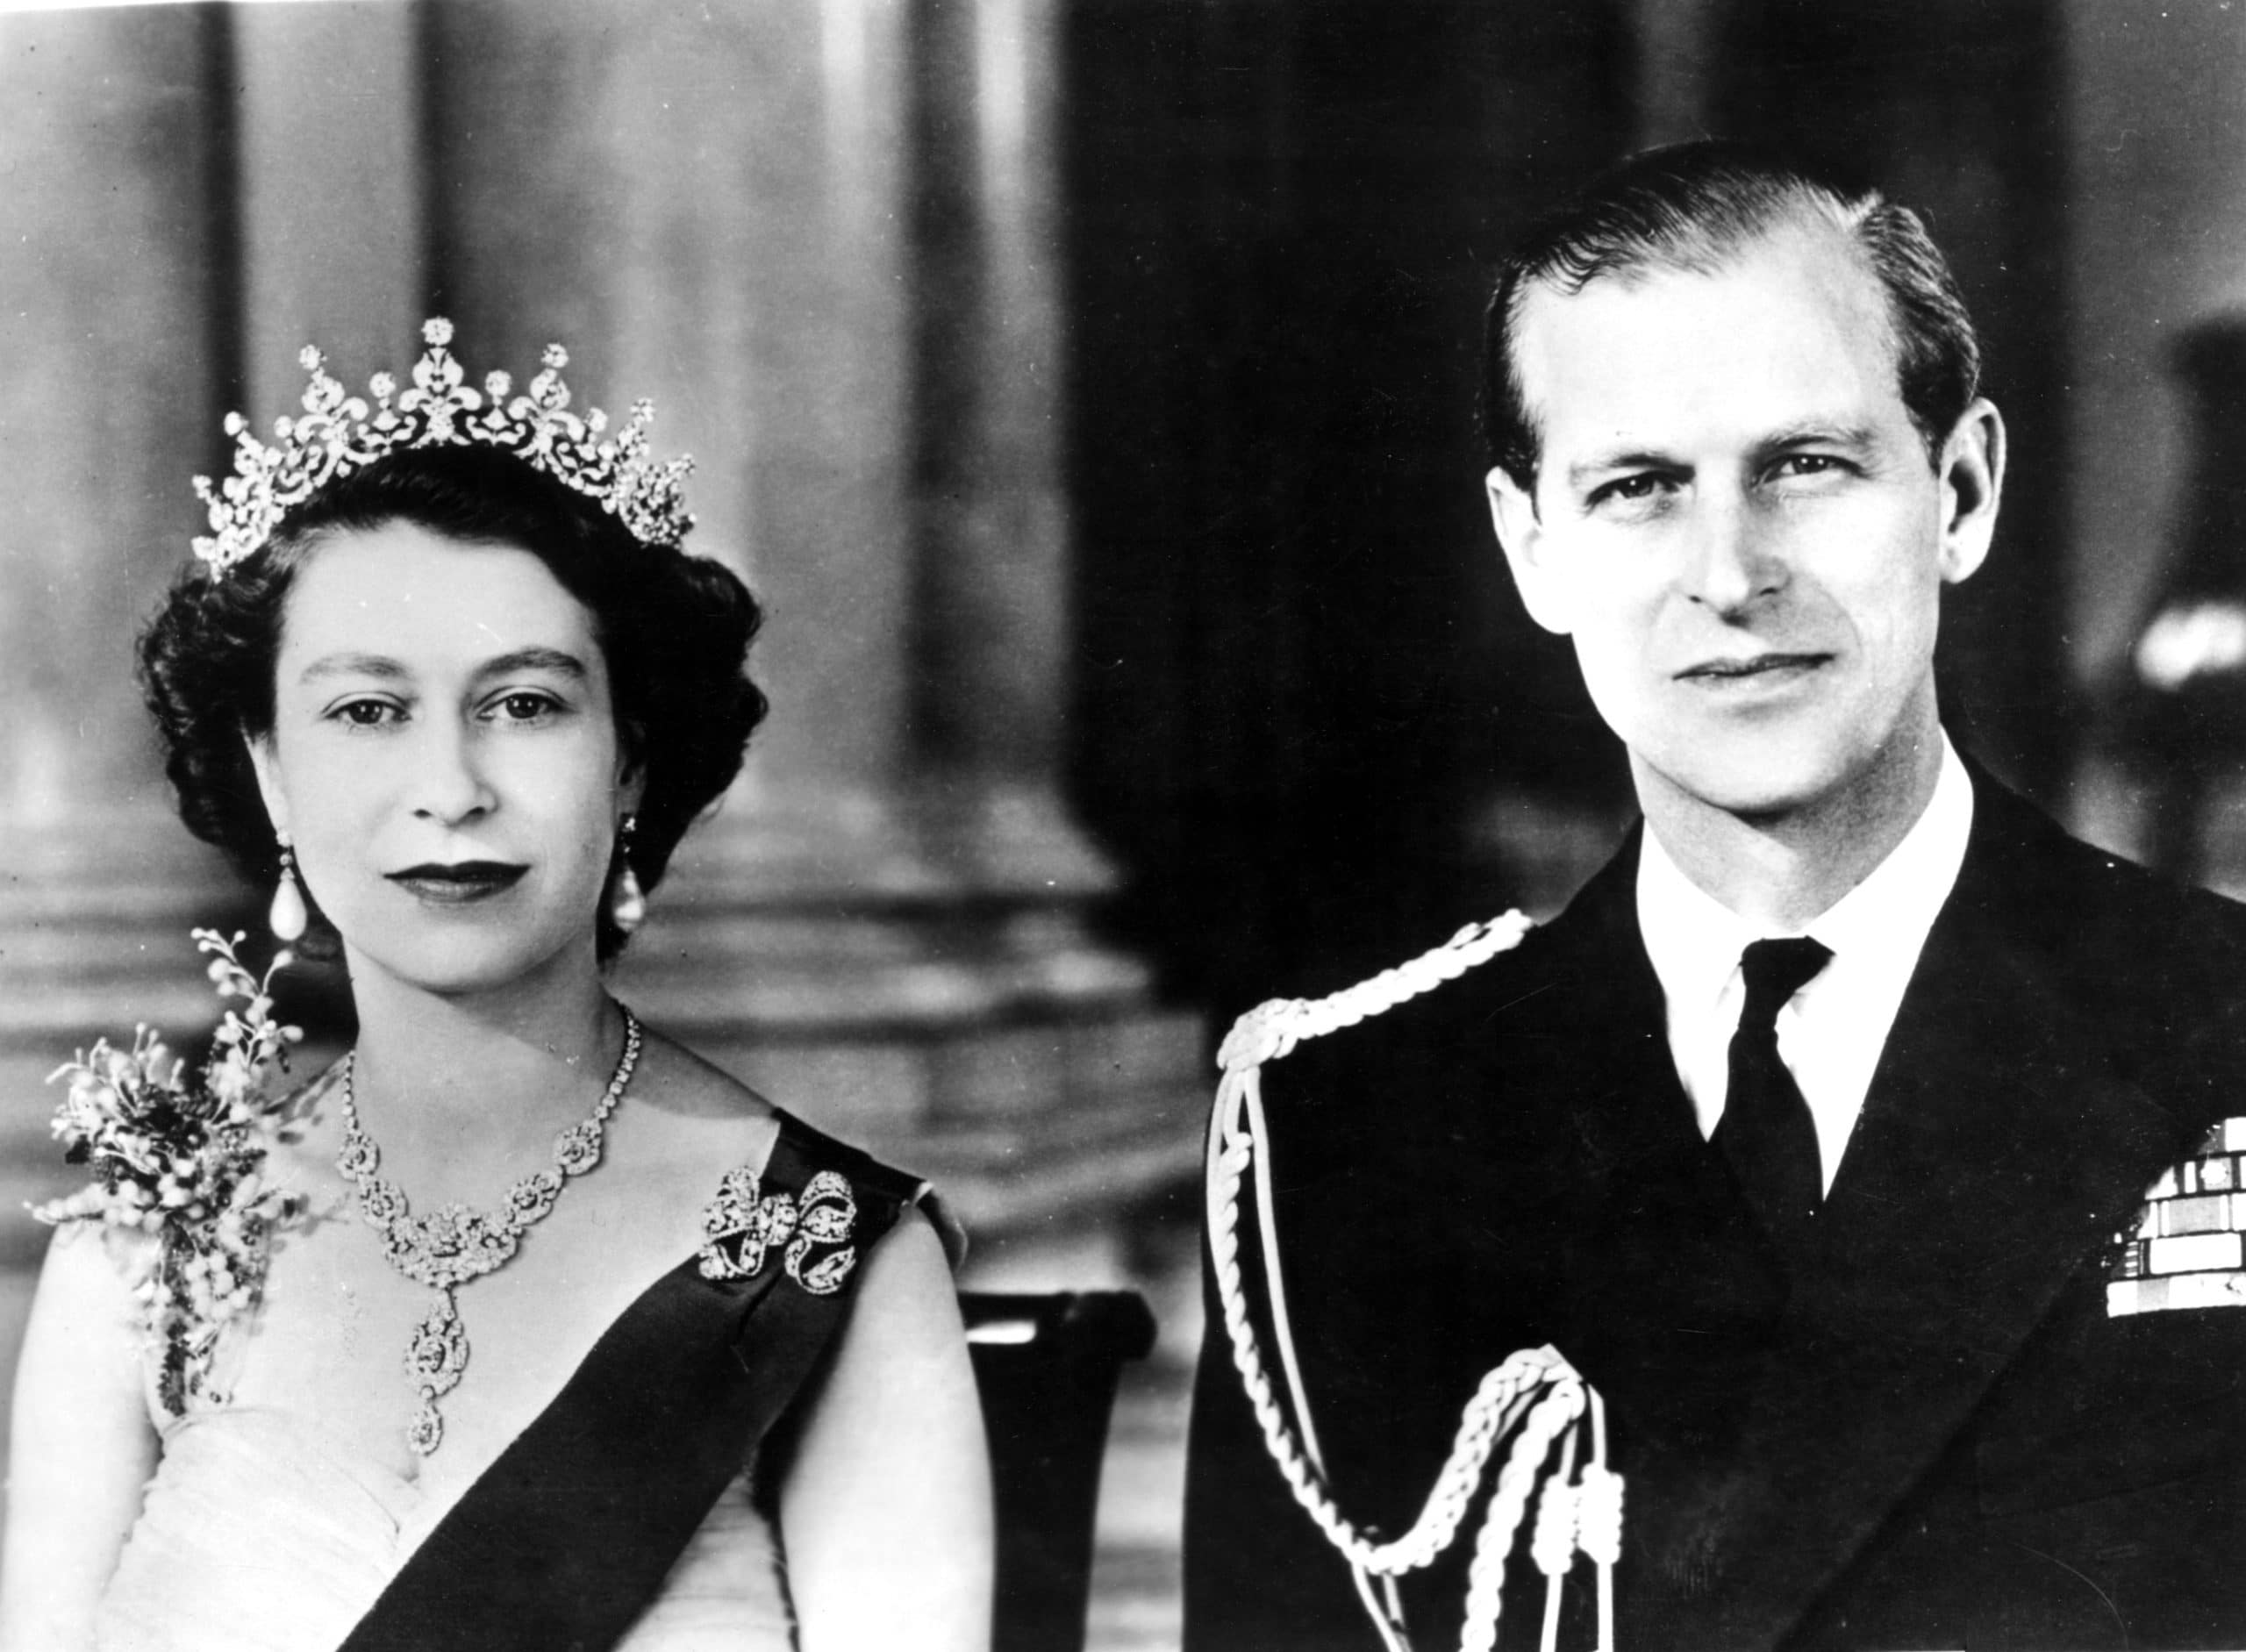 A QUEEN'S ROYAL TOUR, from left, Queen Elizabeth II, Prince Philip, 1954